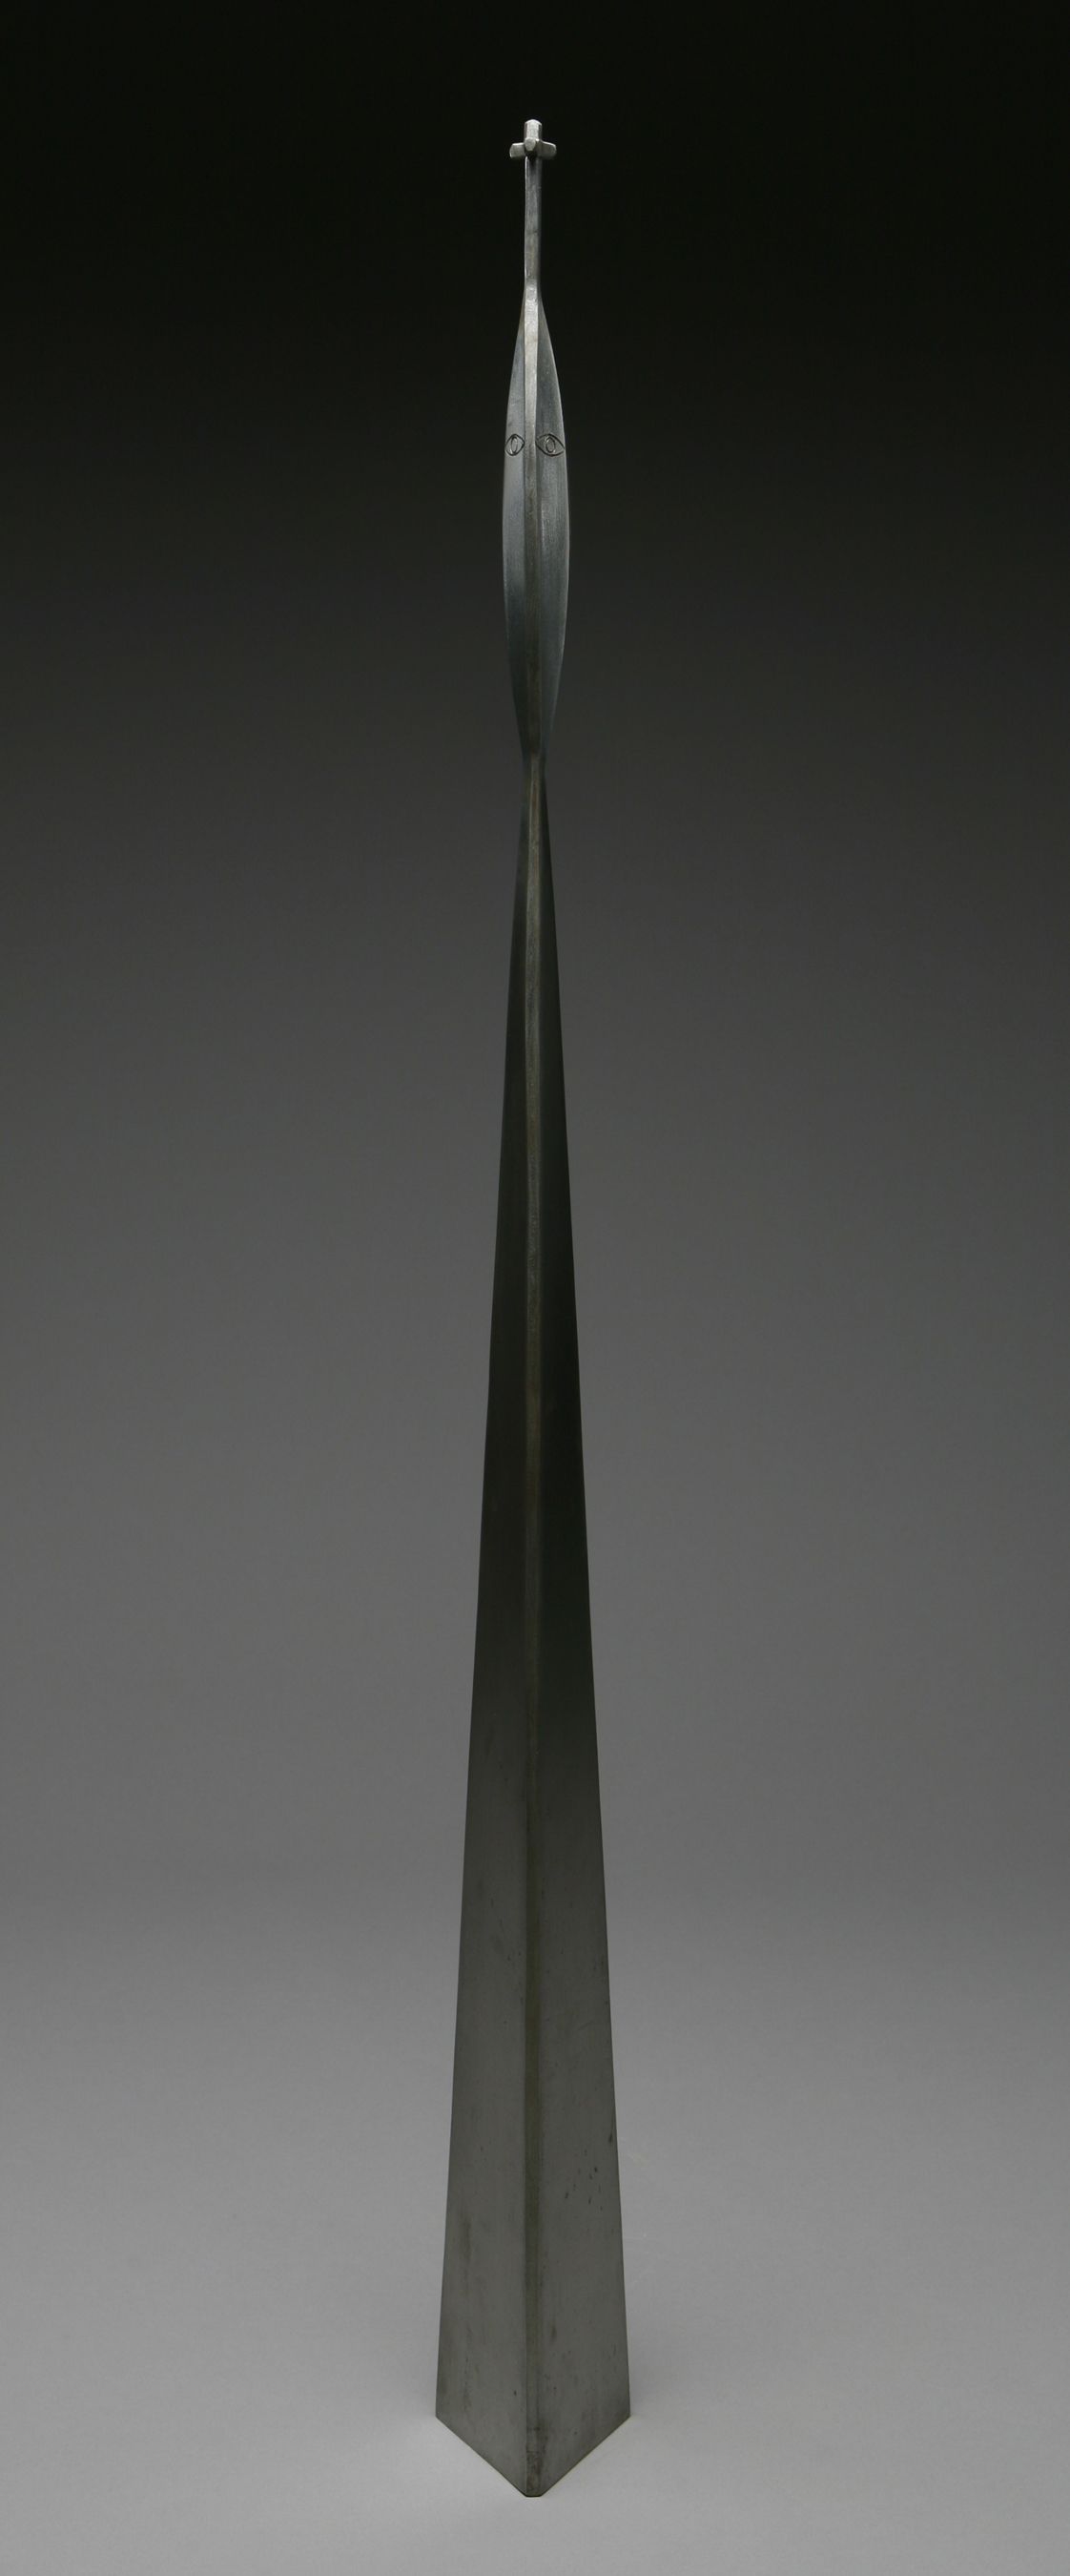 Custom Made Metal Sculpture by Darin White | CustomMade.com